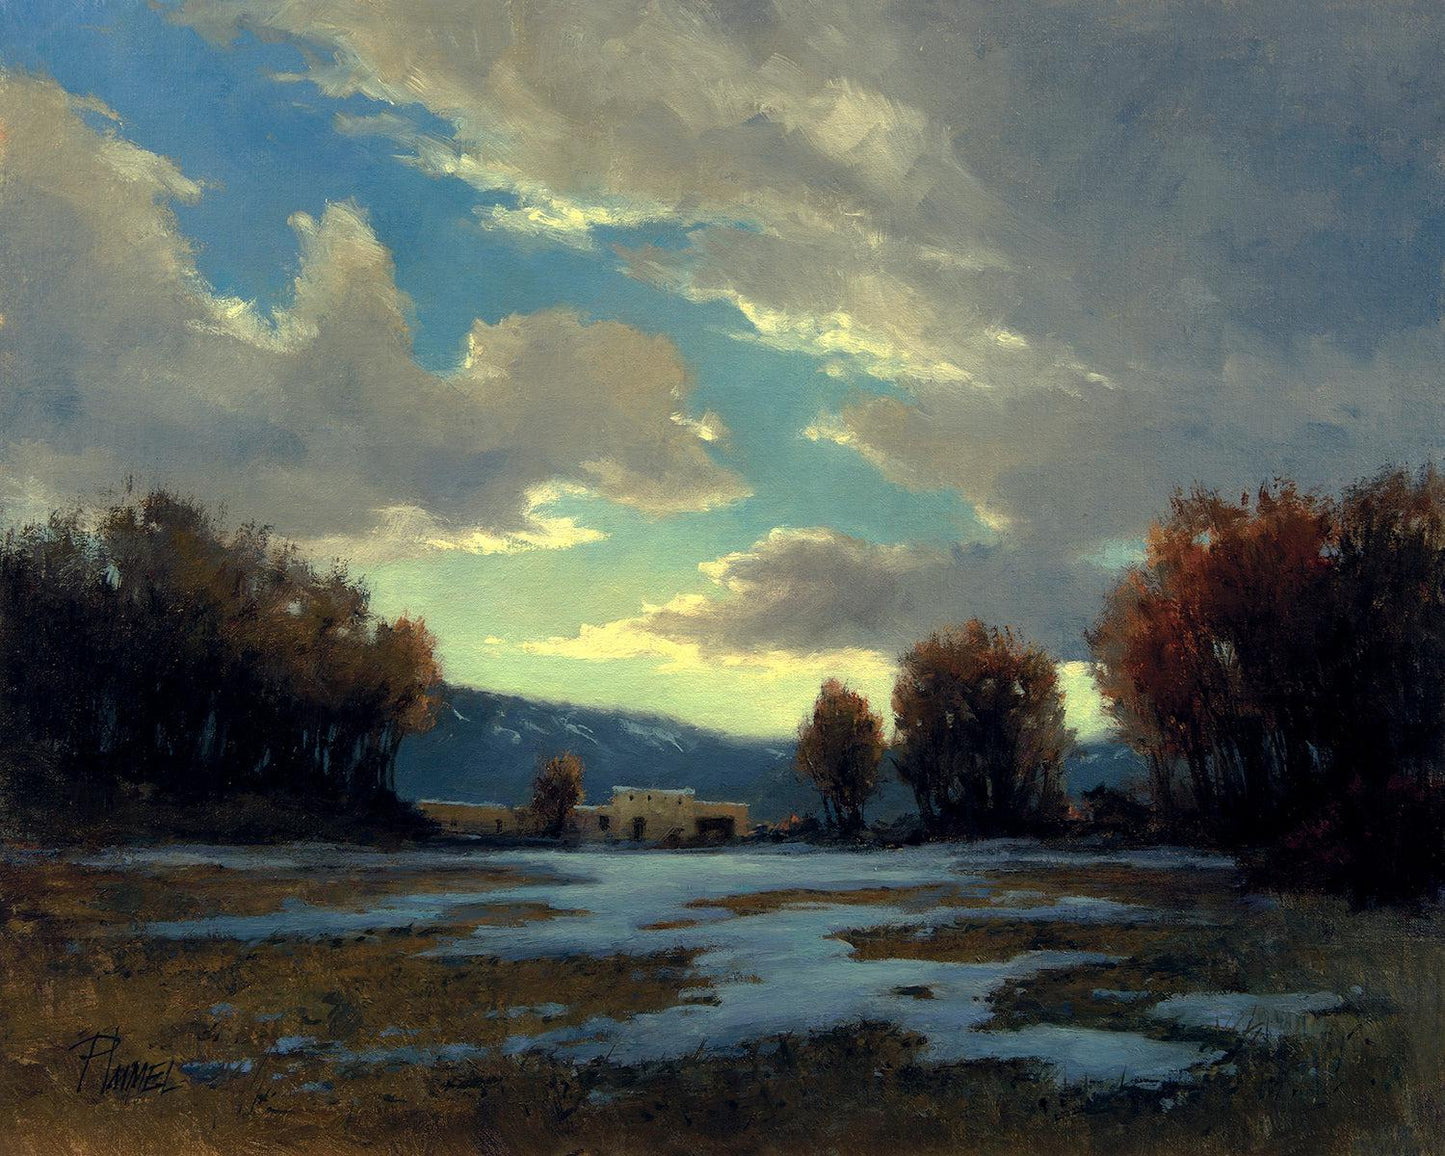 Just Around Sundown-Painting-Peggy Immel-Sorrel Sky Gallery